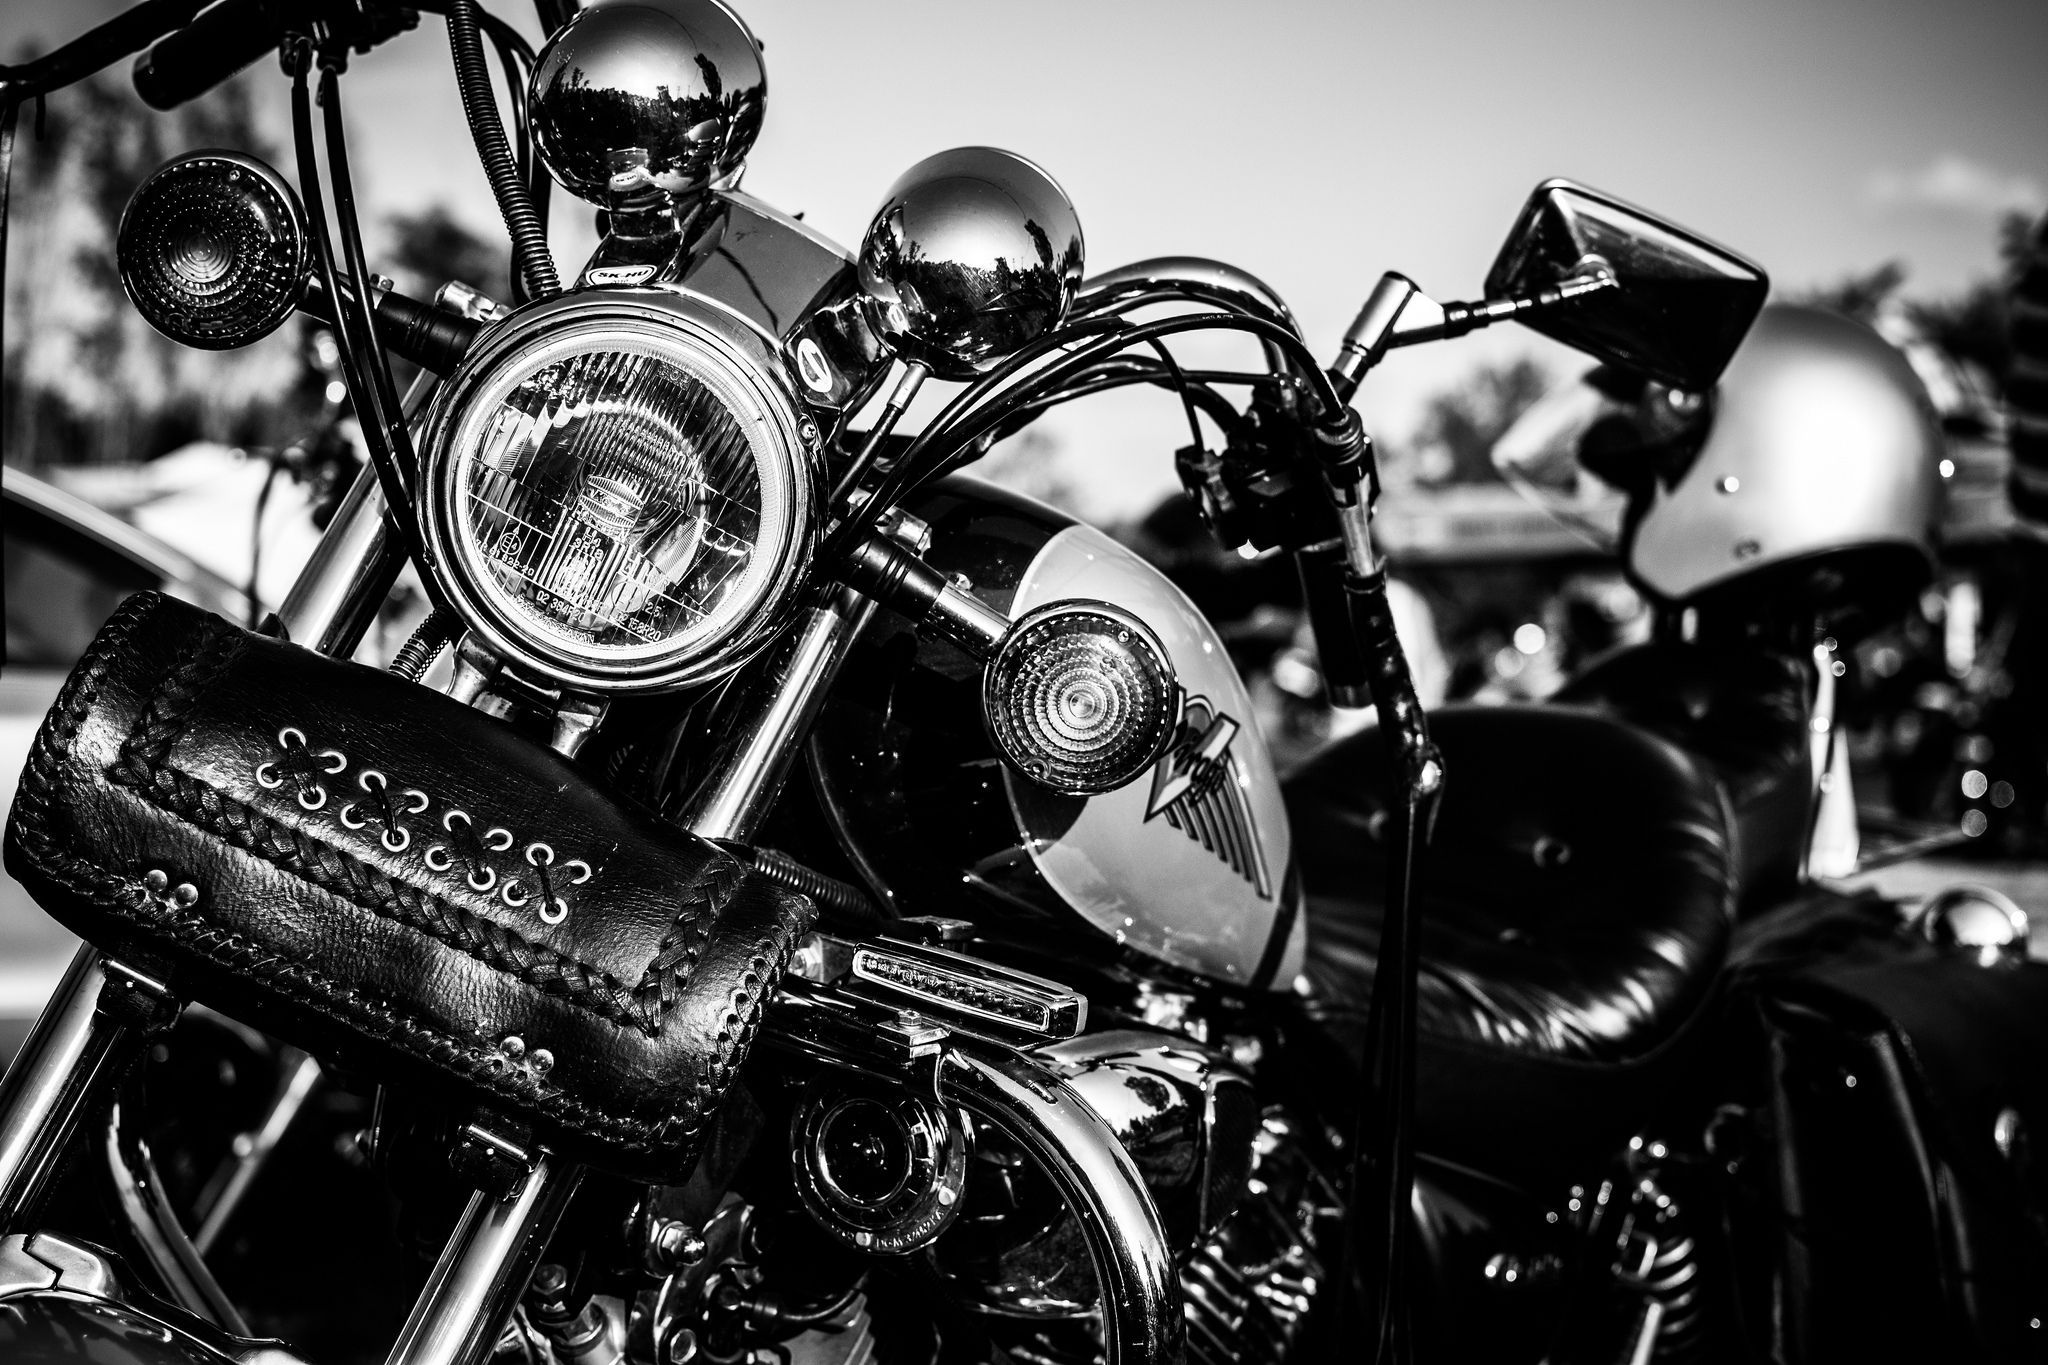 Harley Davidson HD Wallpaper Free Download | Wallpapers ...